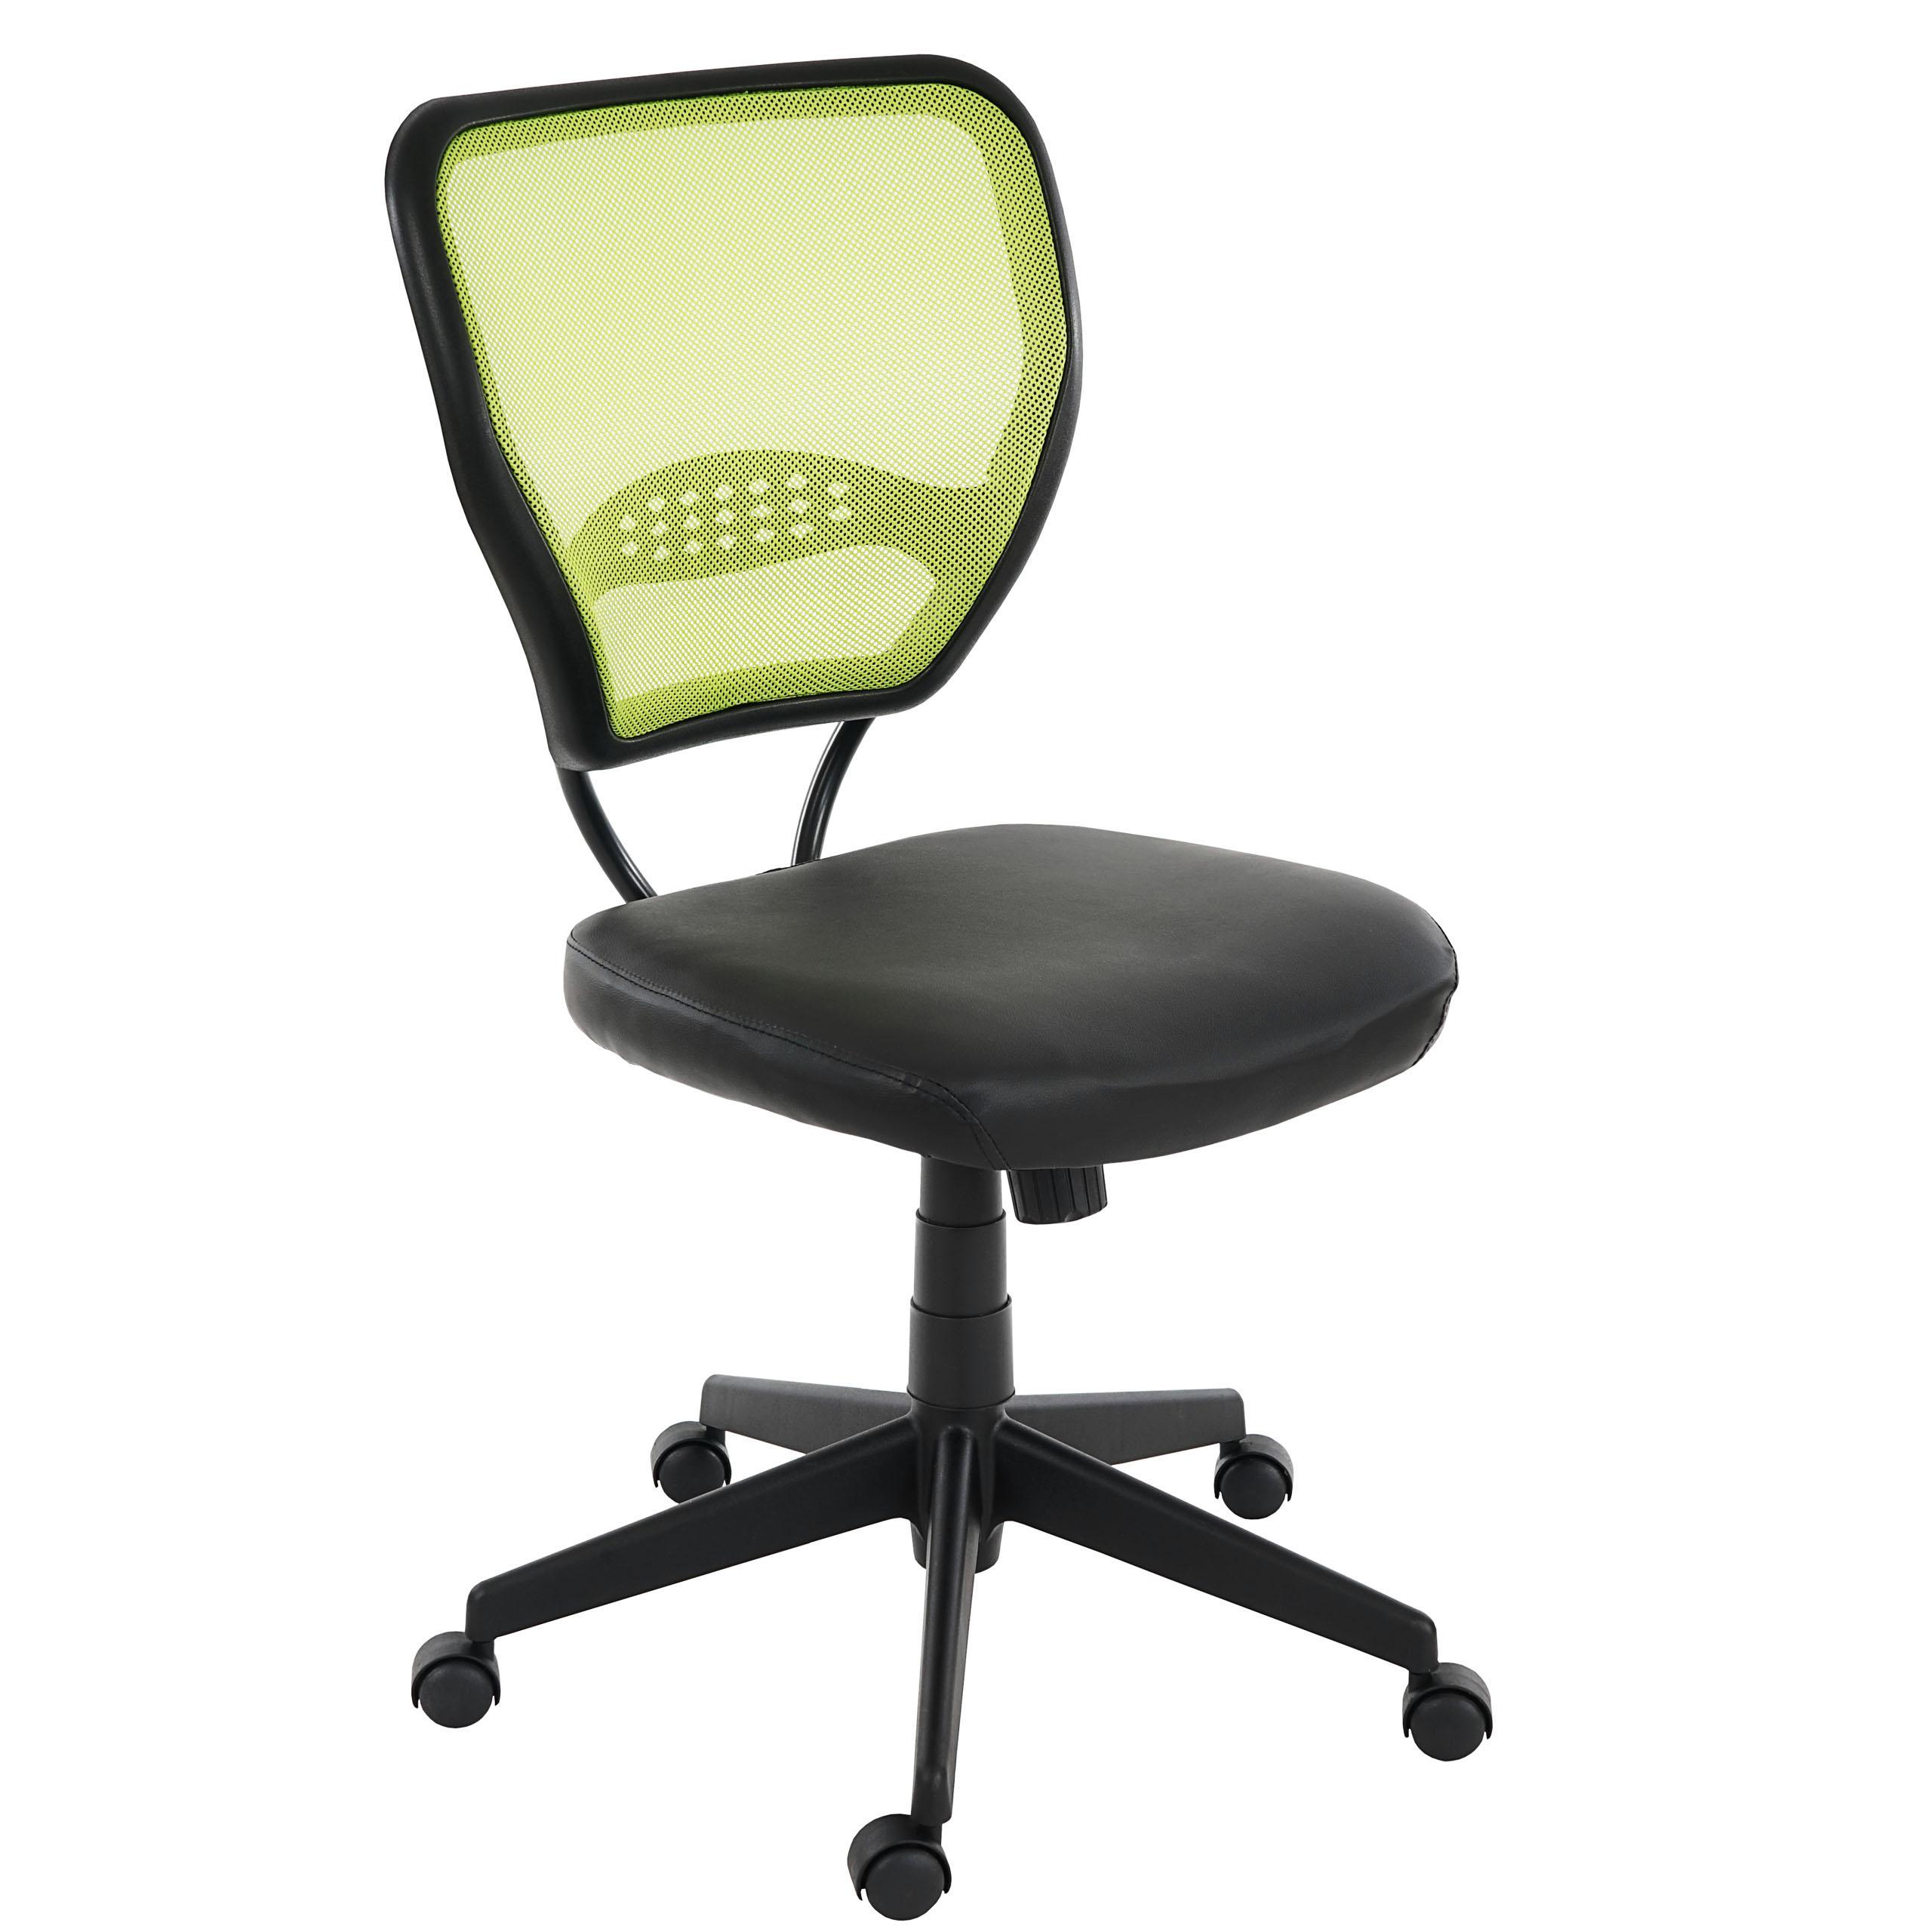 XXL-Bürostuhl TENOYA LEDER OHNE ARMLEHNEN, bequeme Sitzpolsterung, Rückenlehne mit Netzbezug, Farbe Grün